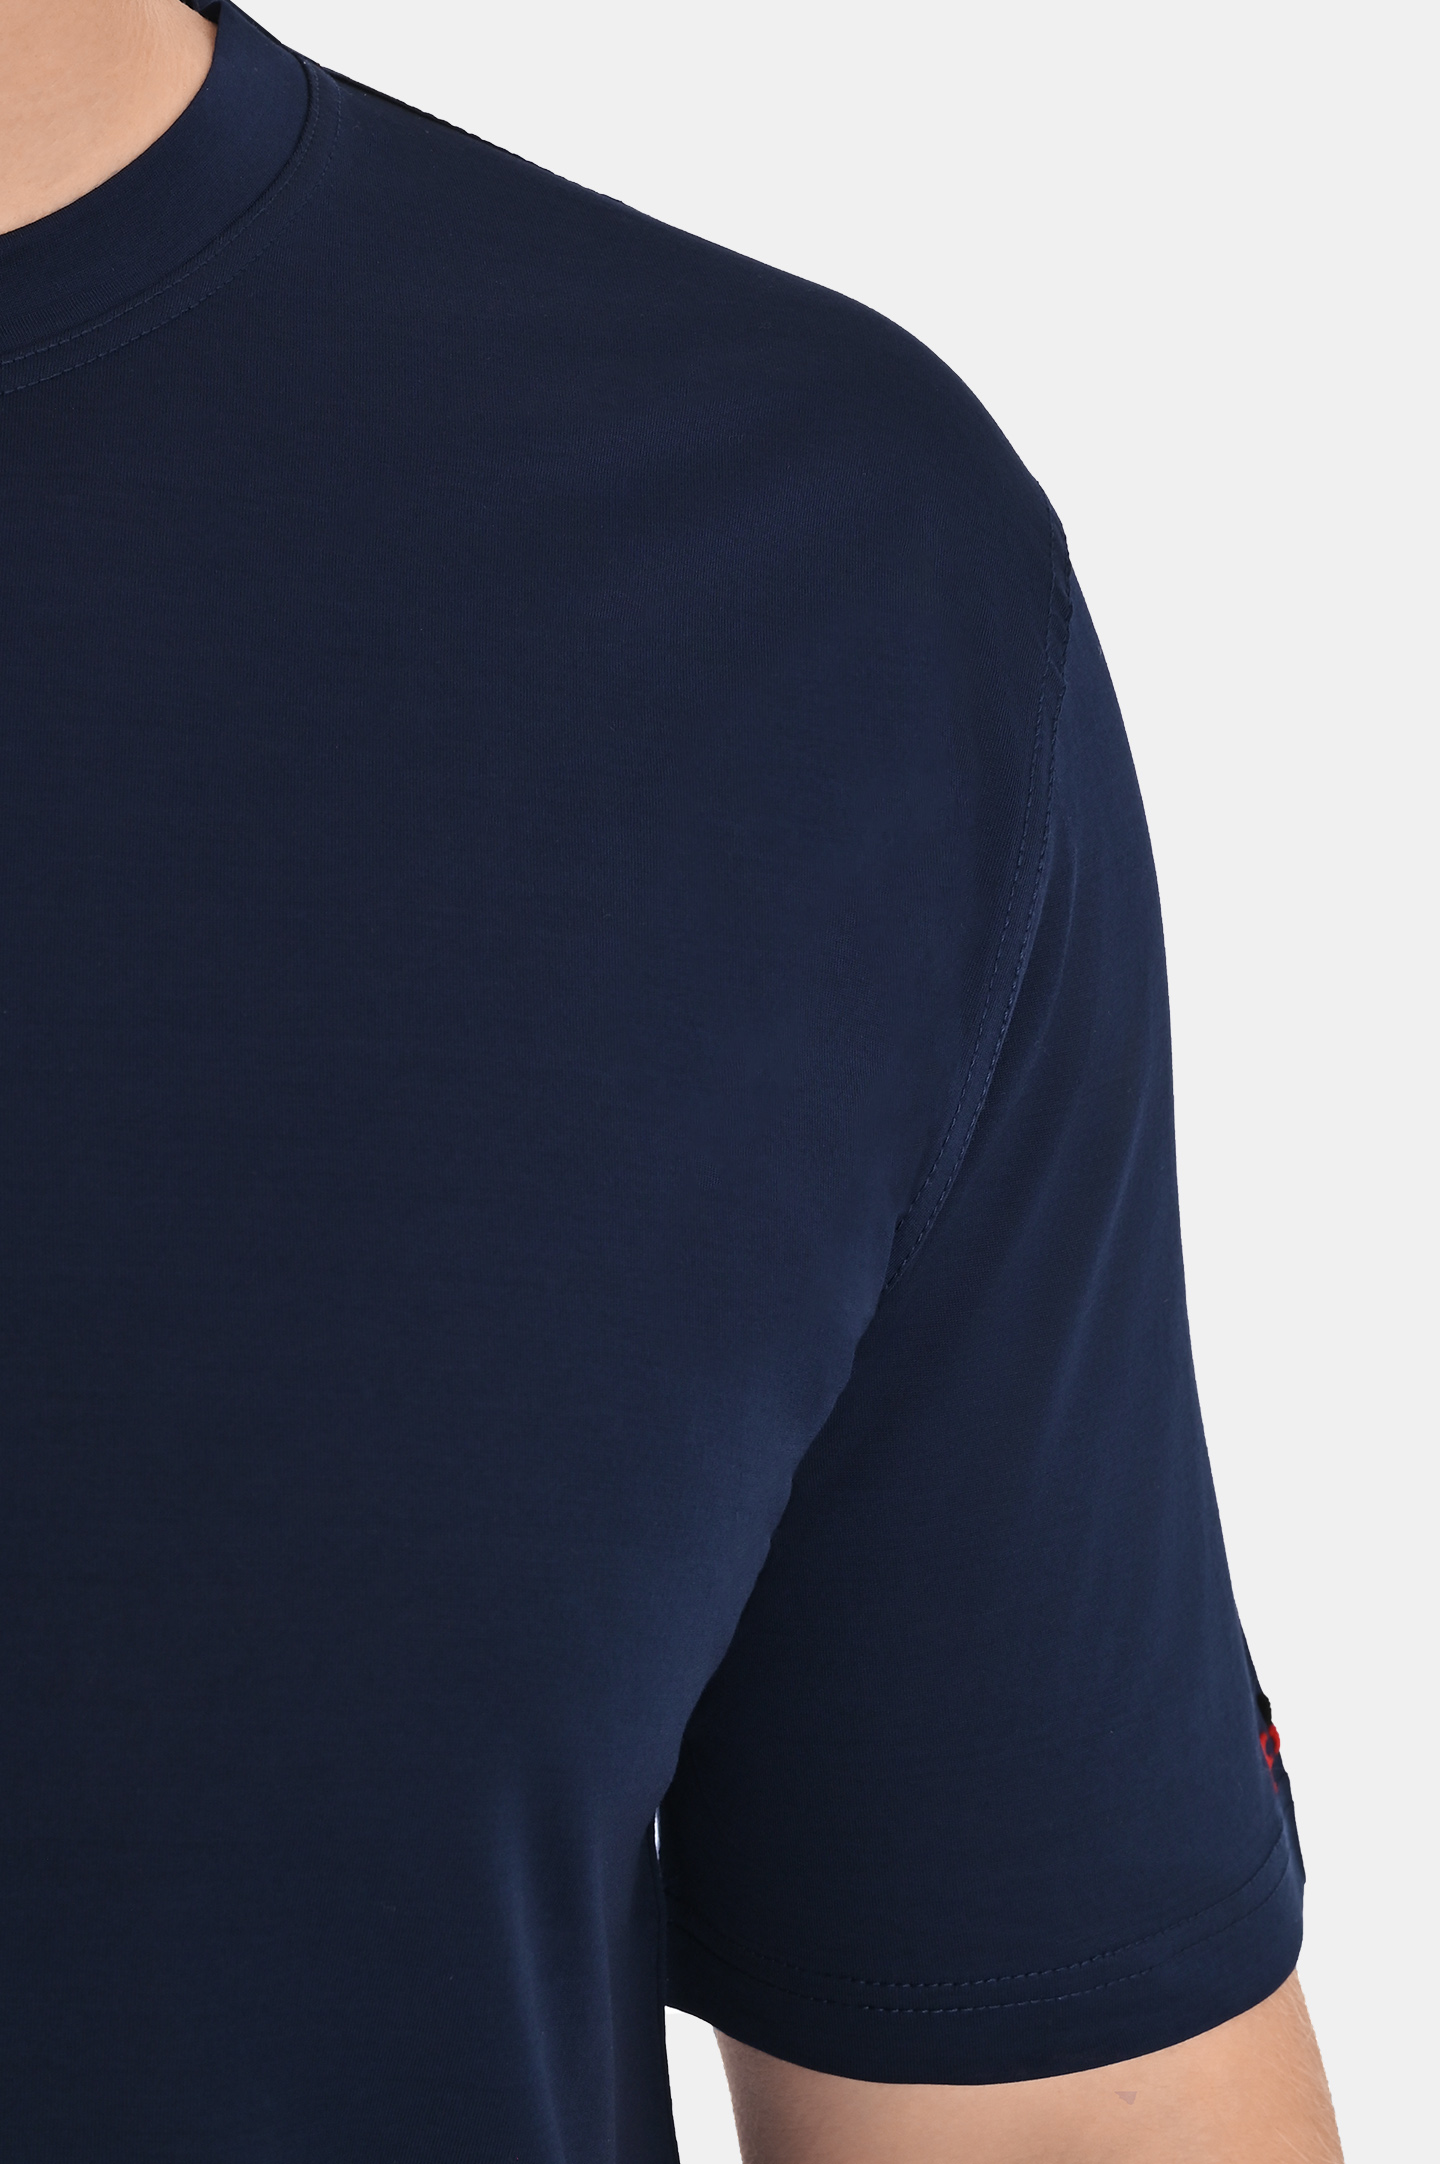 Хлопковая базовая футболка KITON UMK1165769, цвет: Темно-синий, Мужской